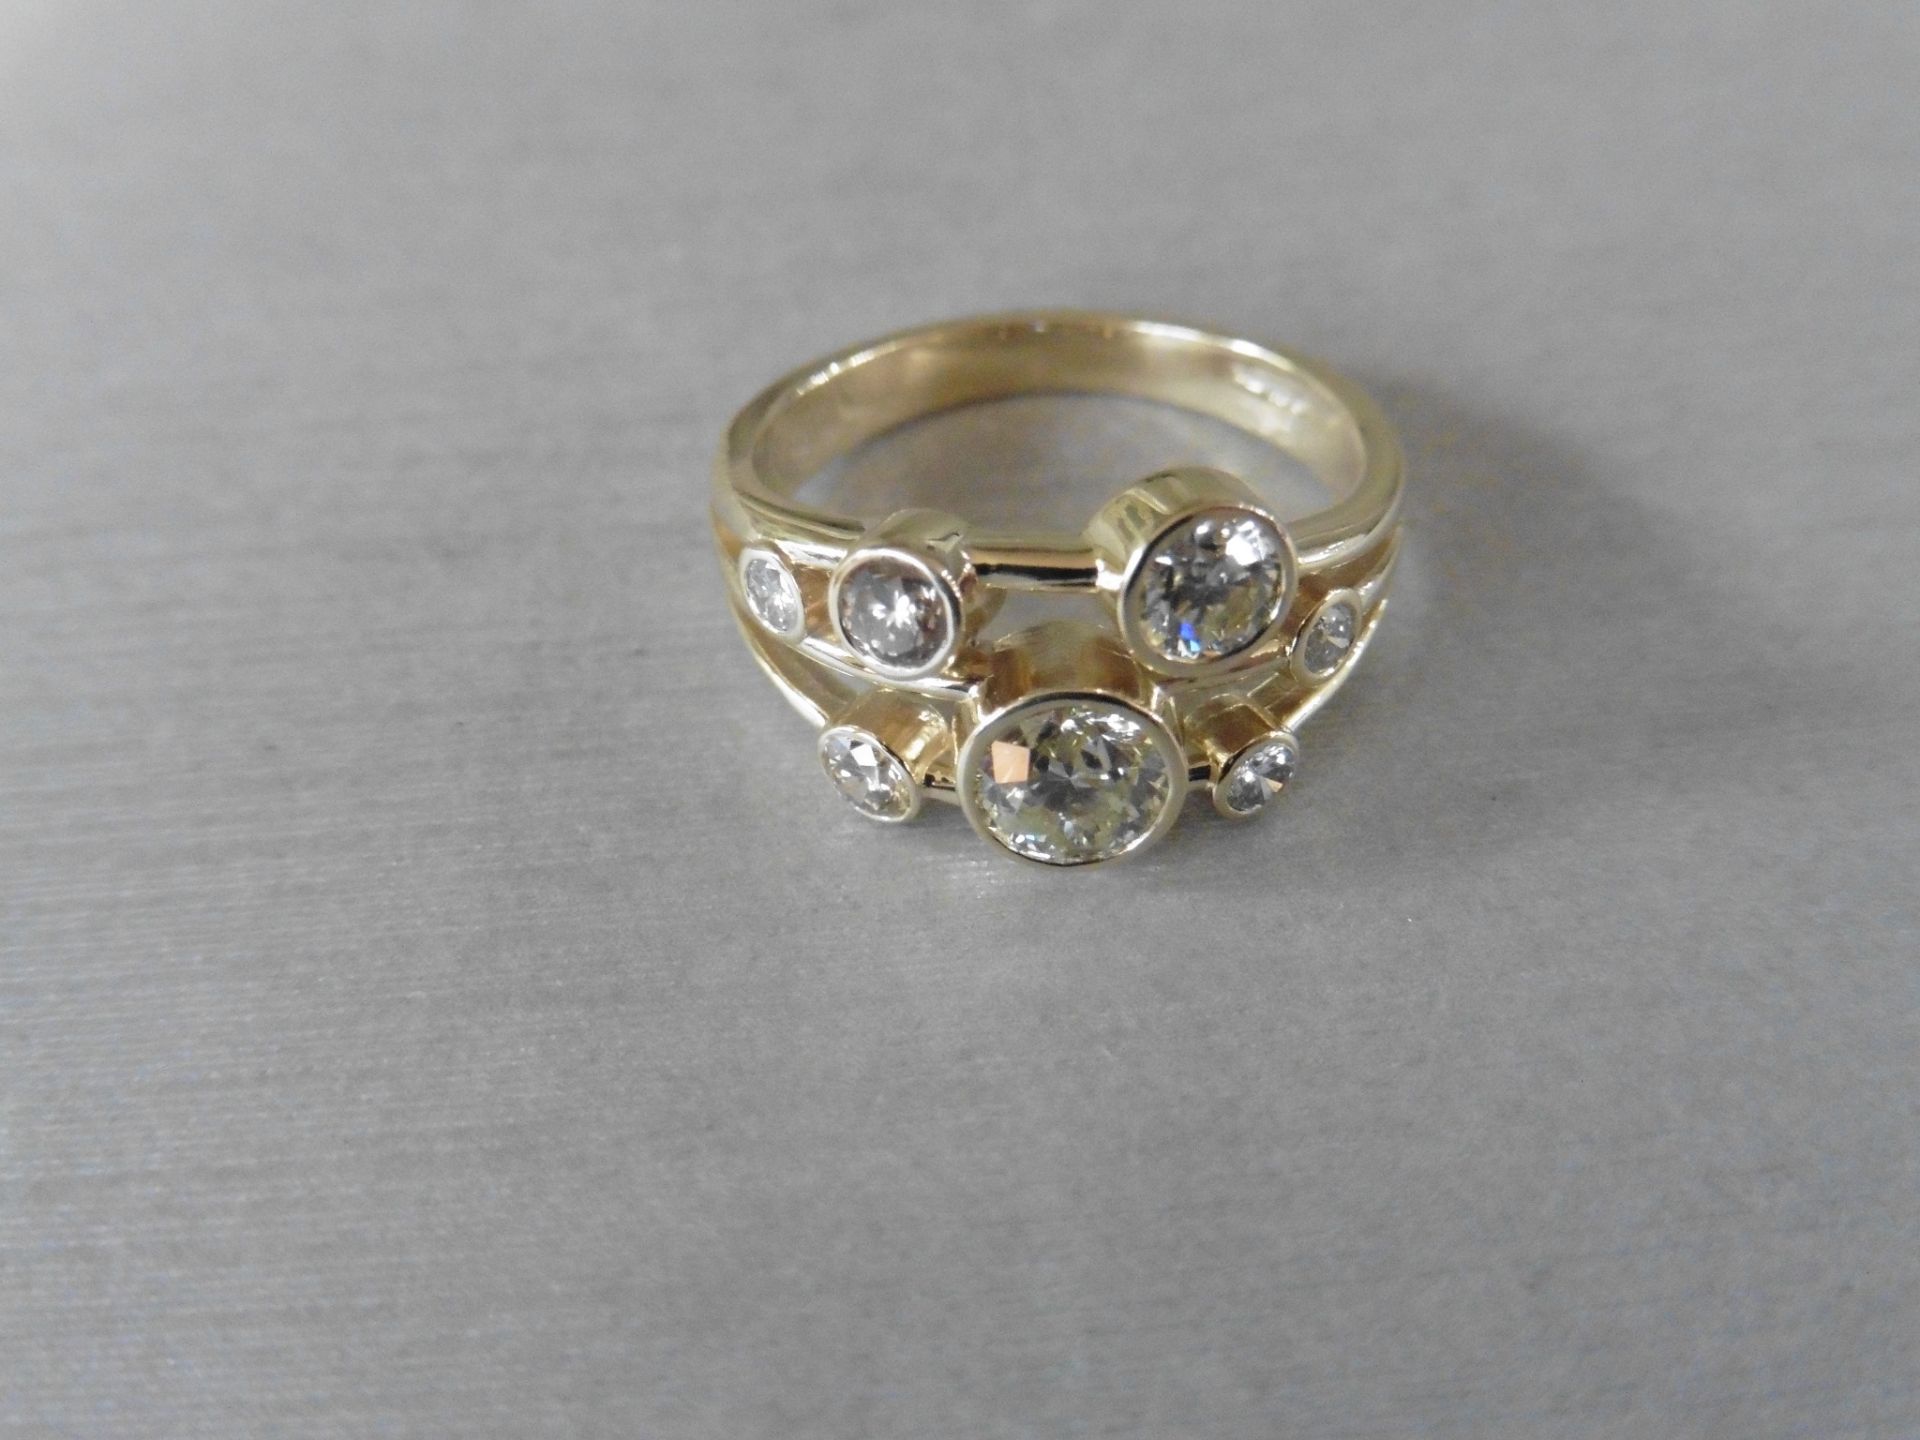 1.00ct 9ct yellow gold diamond dress ring, rain dance style. Set with 7 graduated brilliant cut - Image 2 of 3